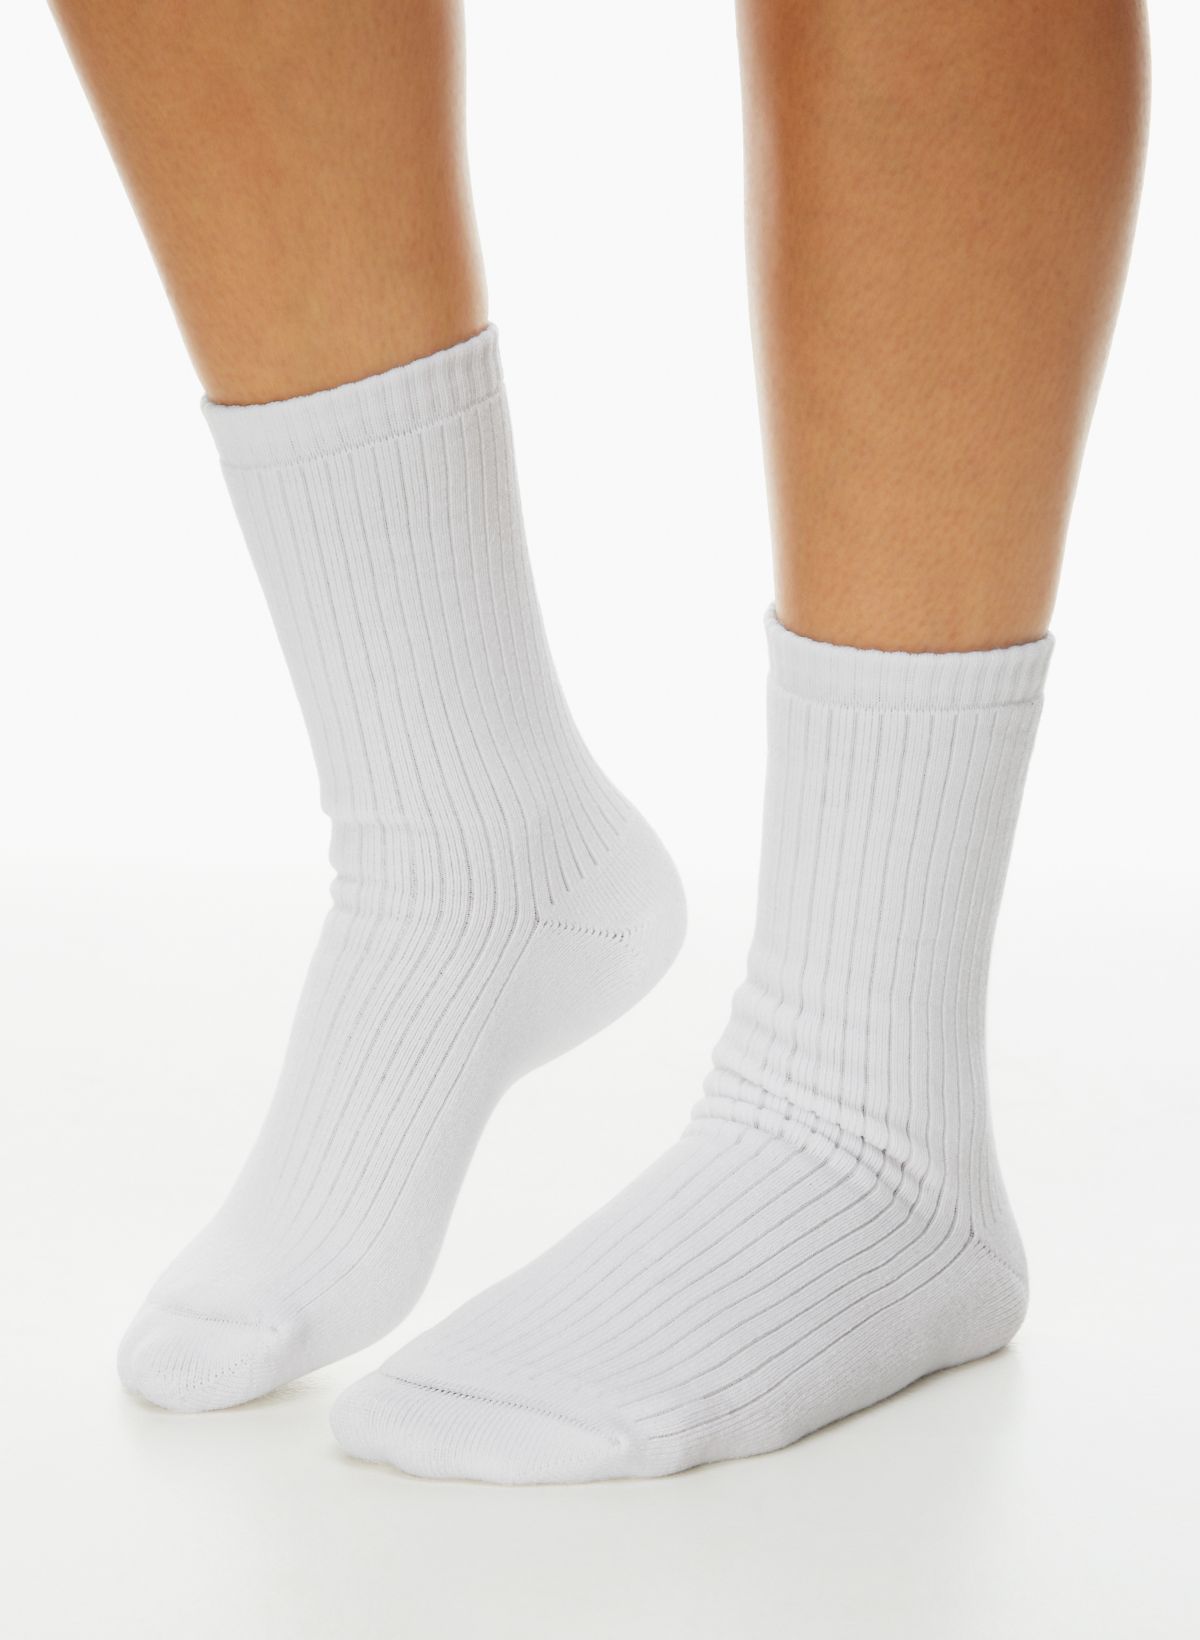 American Made Lightweight Comfy Slouch Socks - 12 Pair Bulk Pack